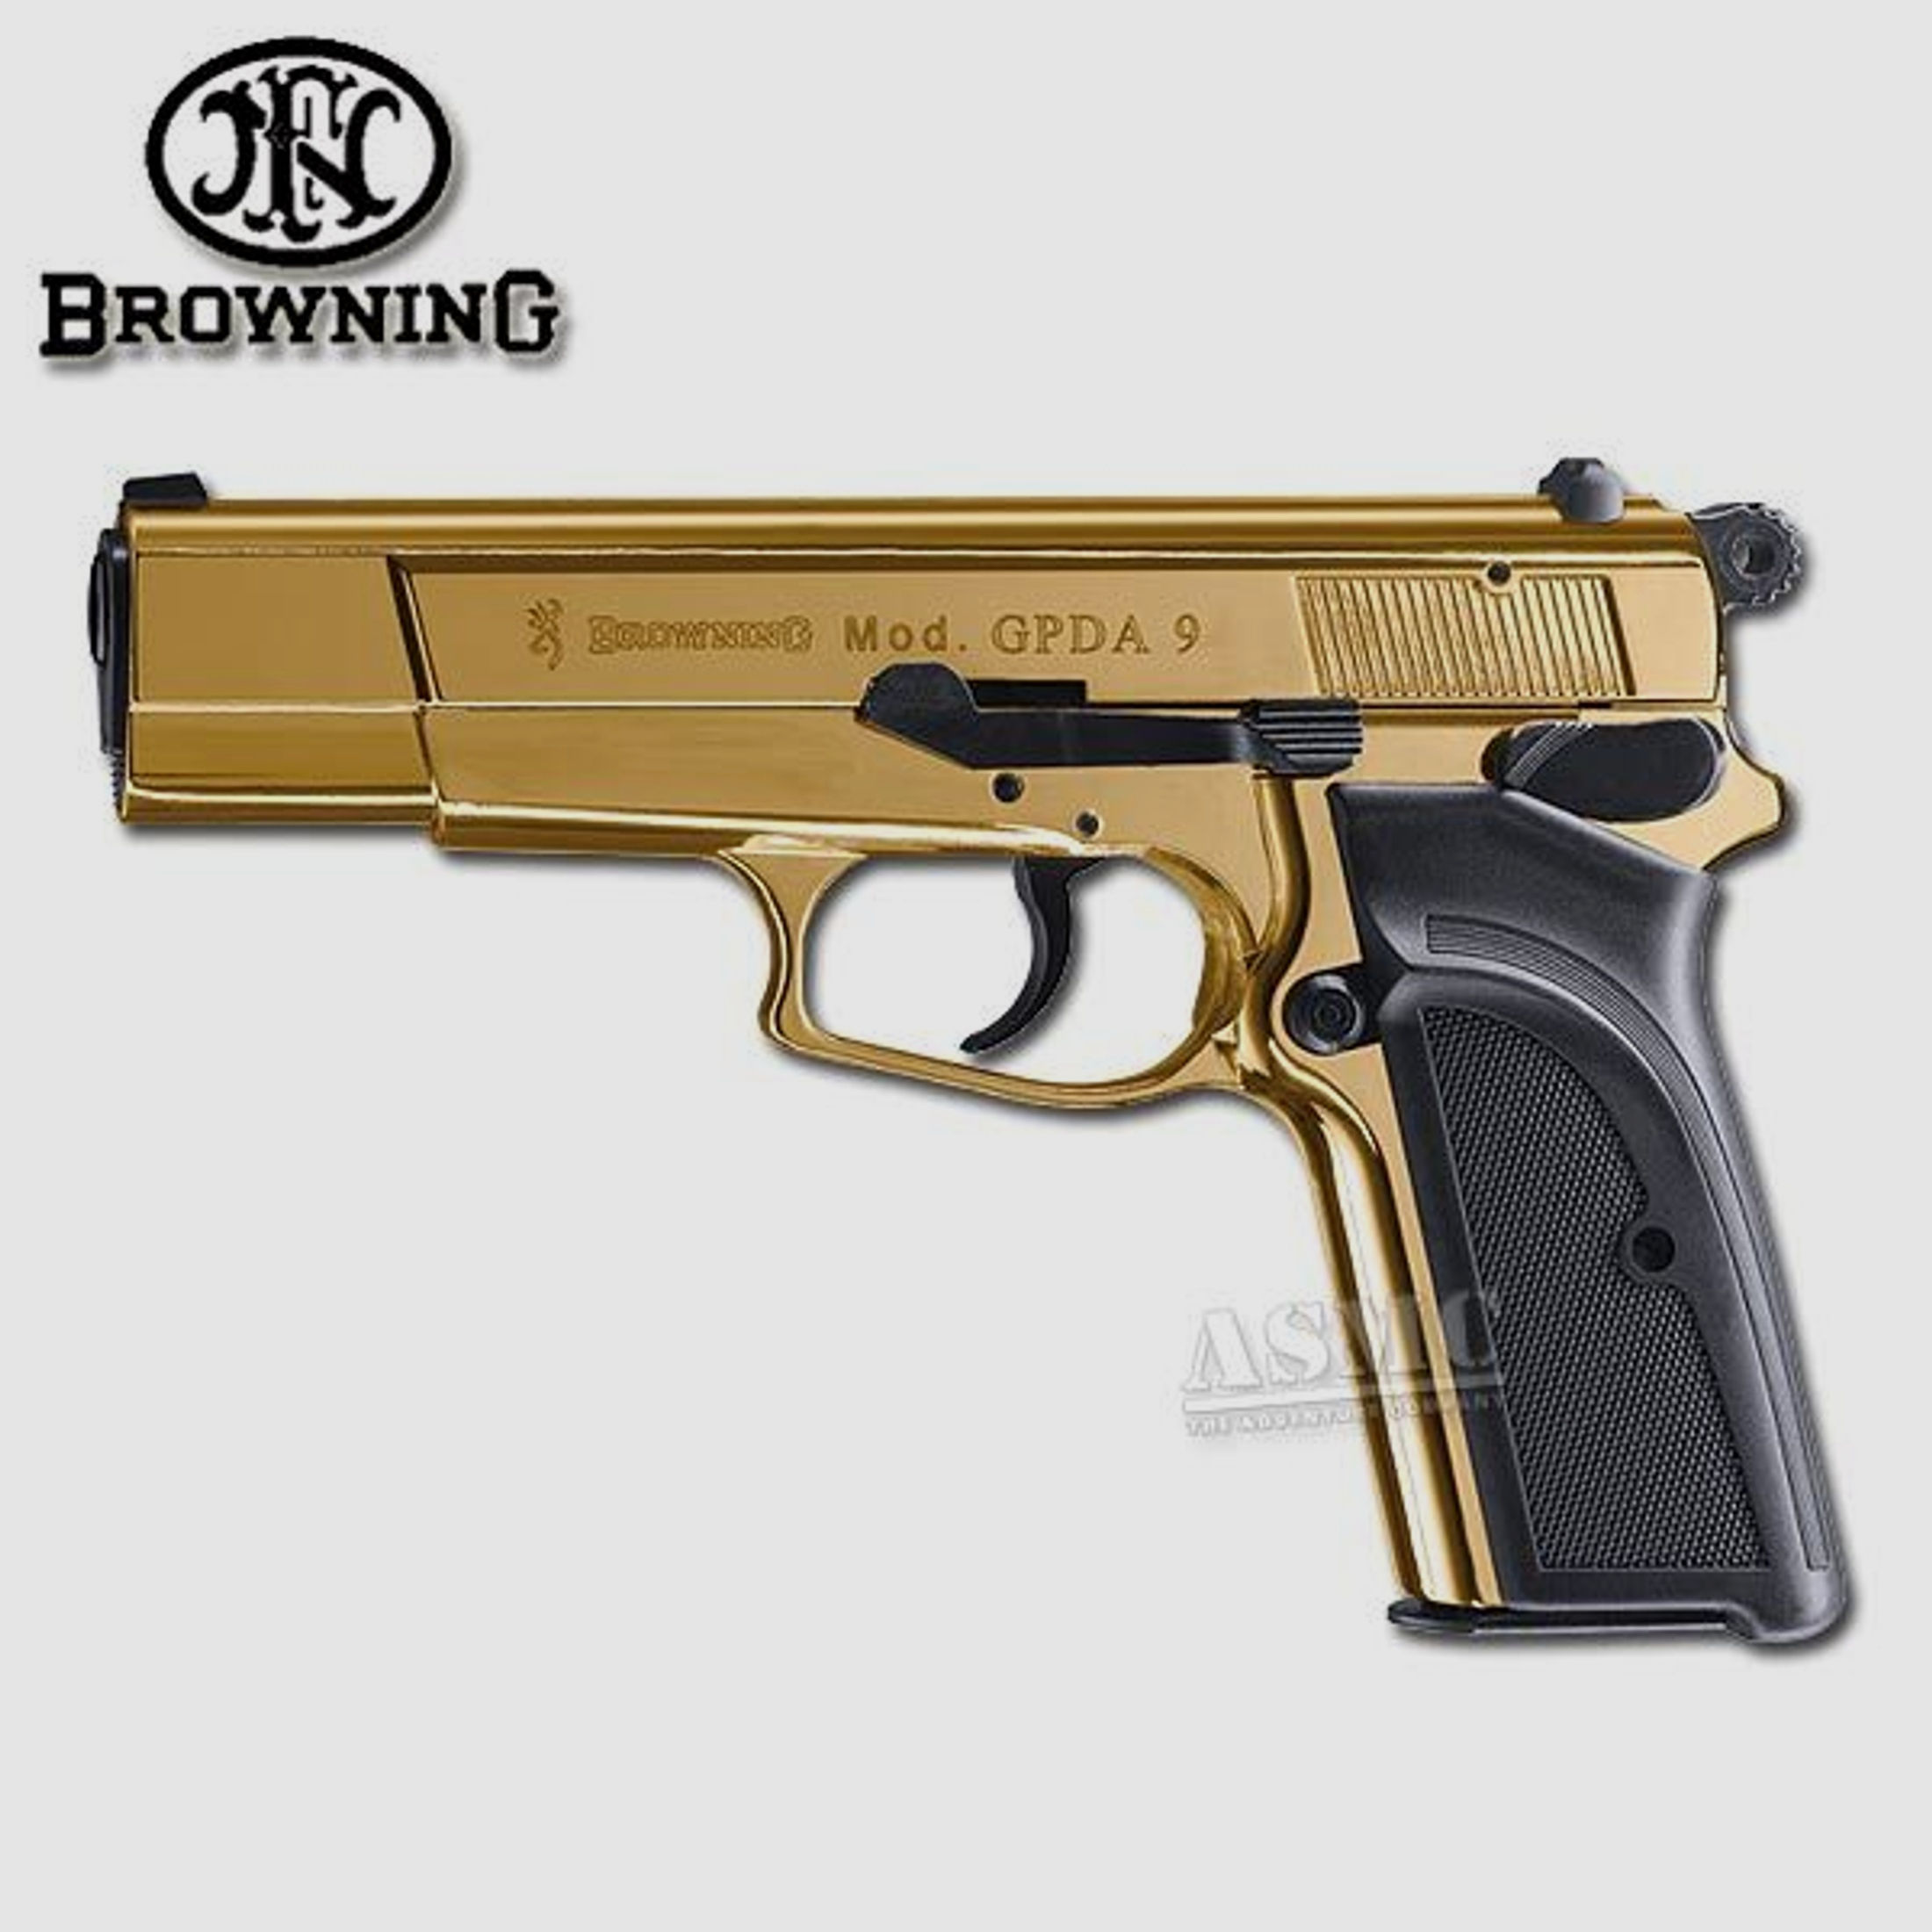 Browning Pistole Browning GPDA9 goldfarben